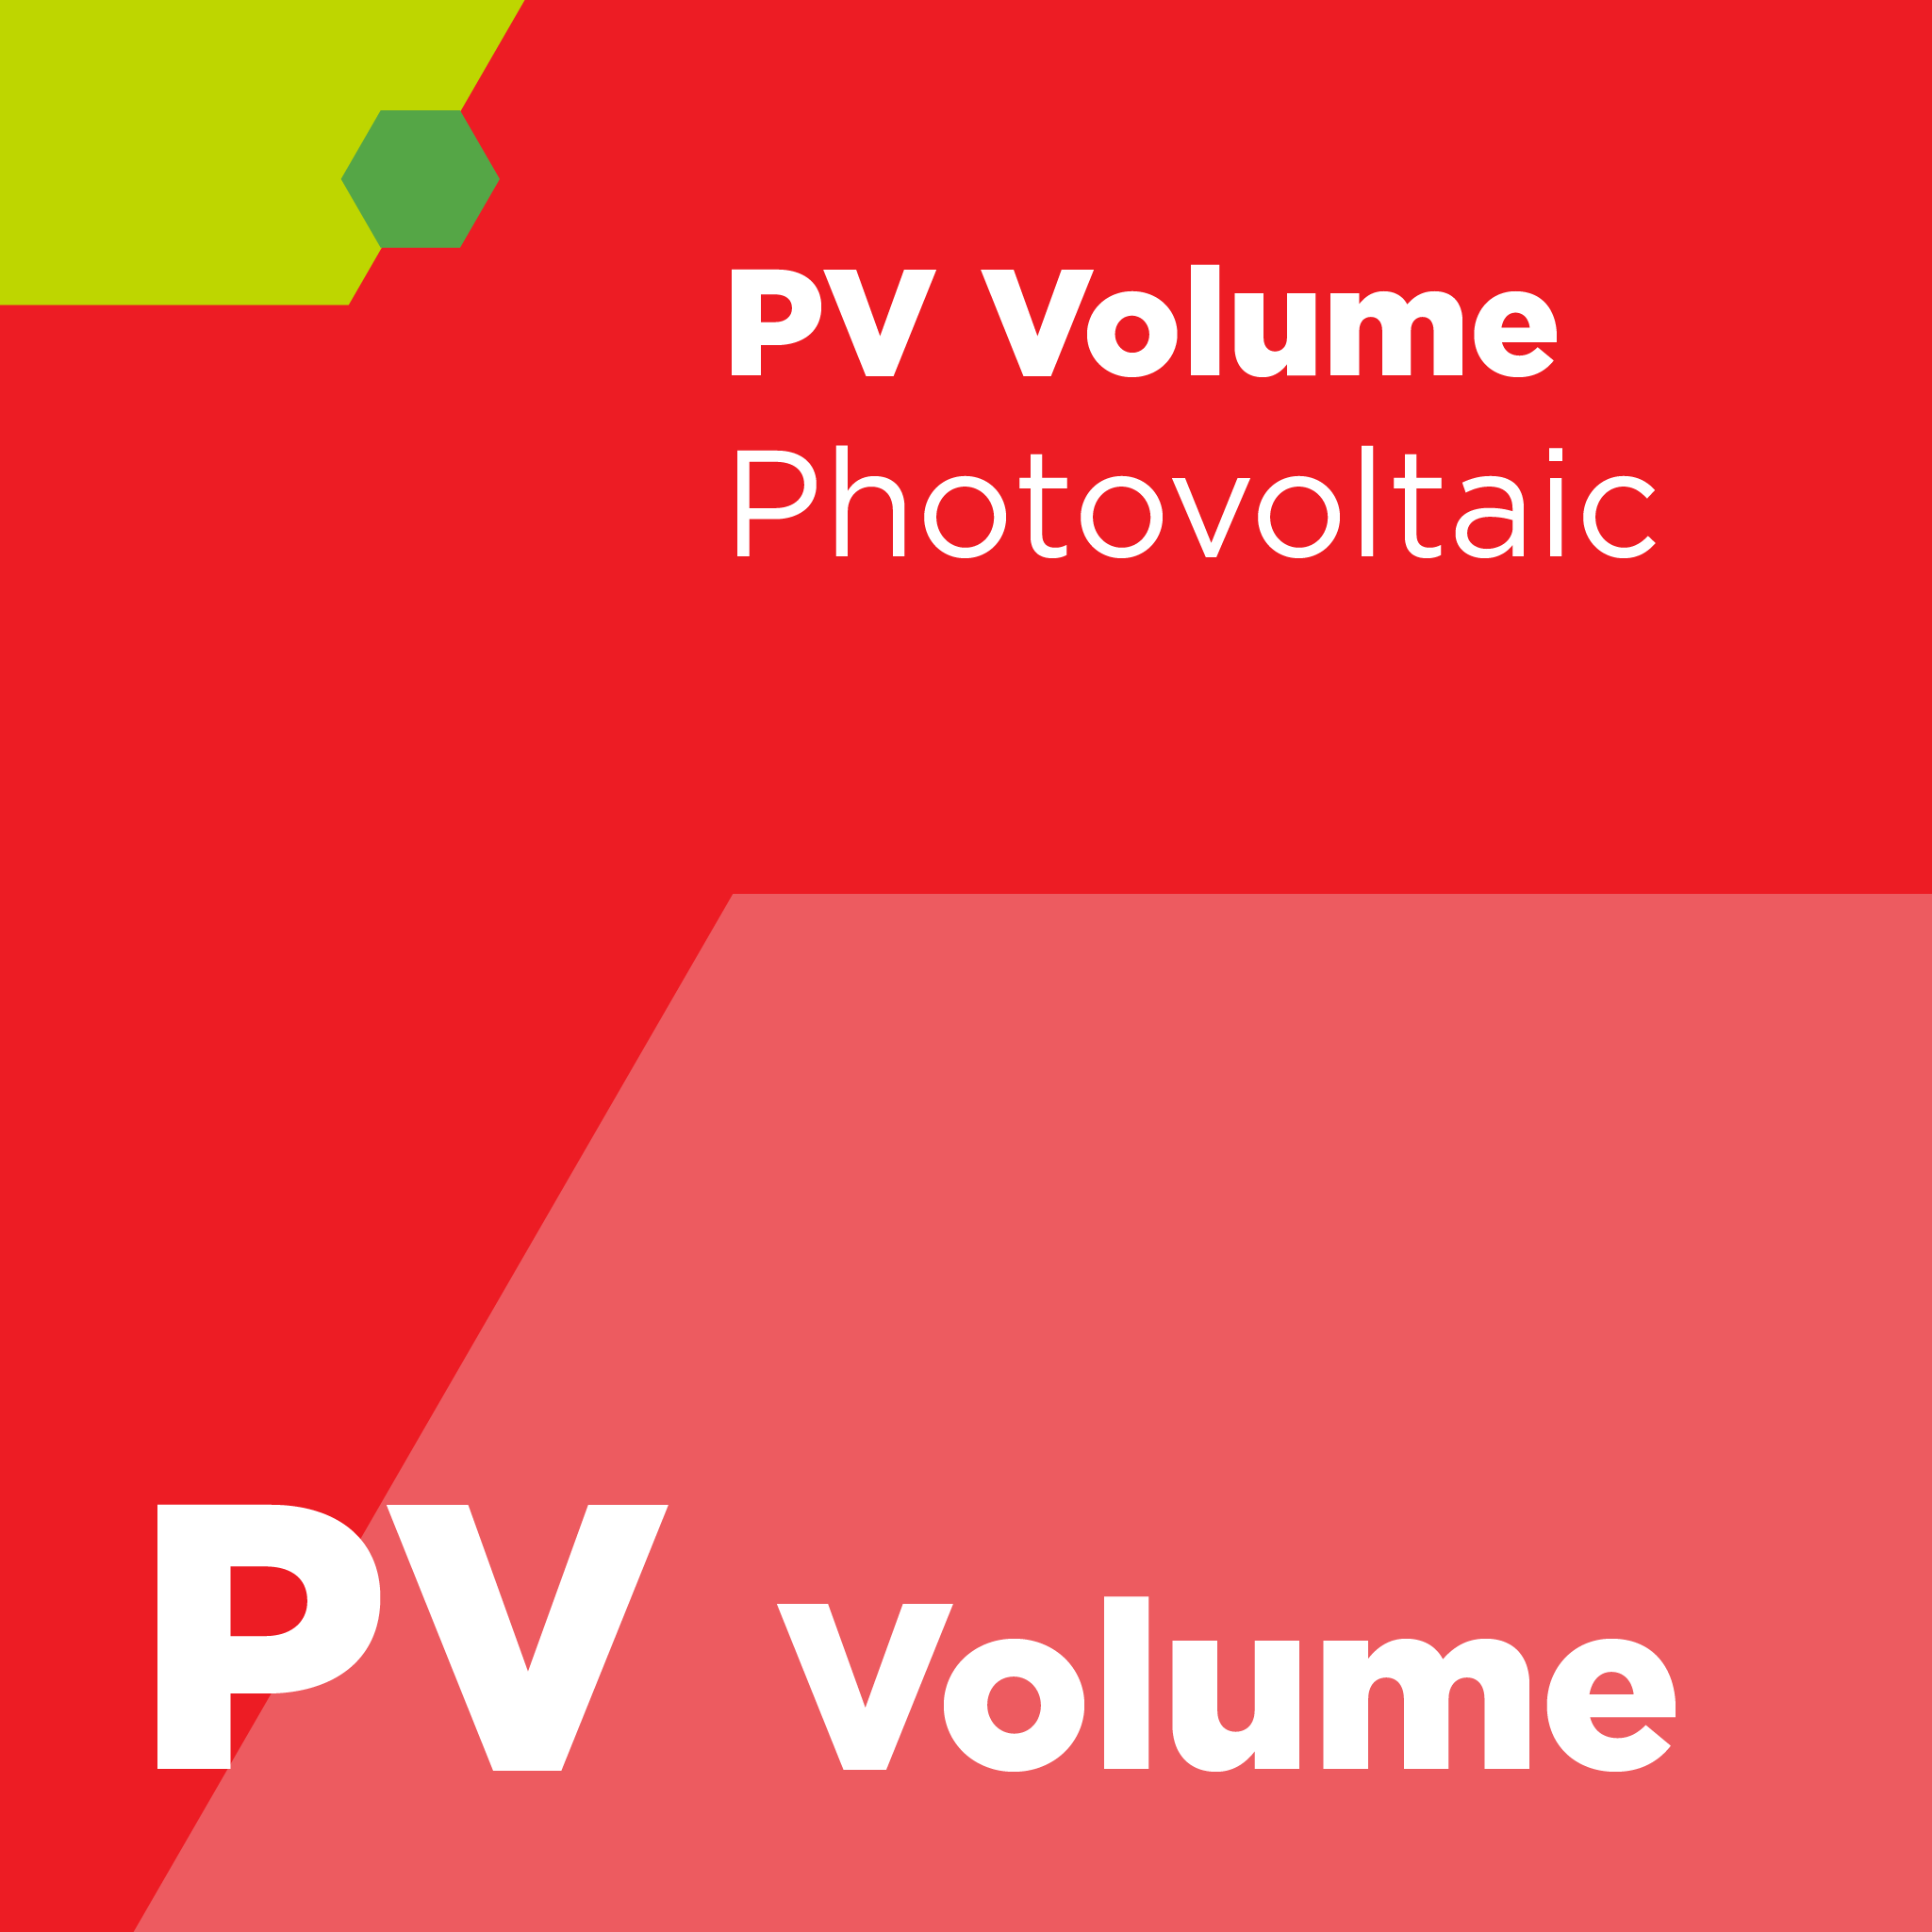 PV00900 - SEMI PV9 - 短時間光パルス照射後のマイクロ波反射率の非接触測定による，PVシリコン材料の過剰キャリア減衰（ライフタイム）試験方法